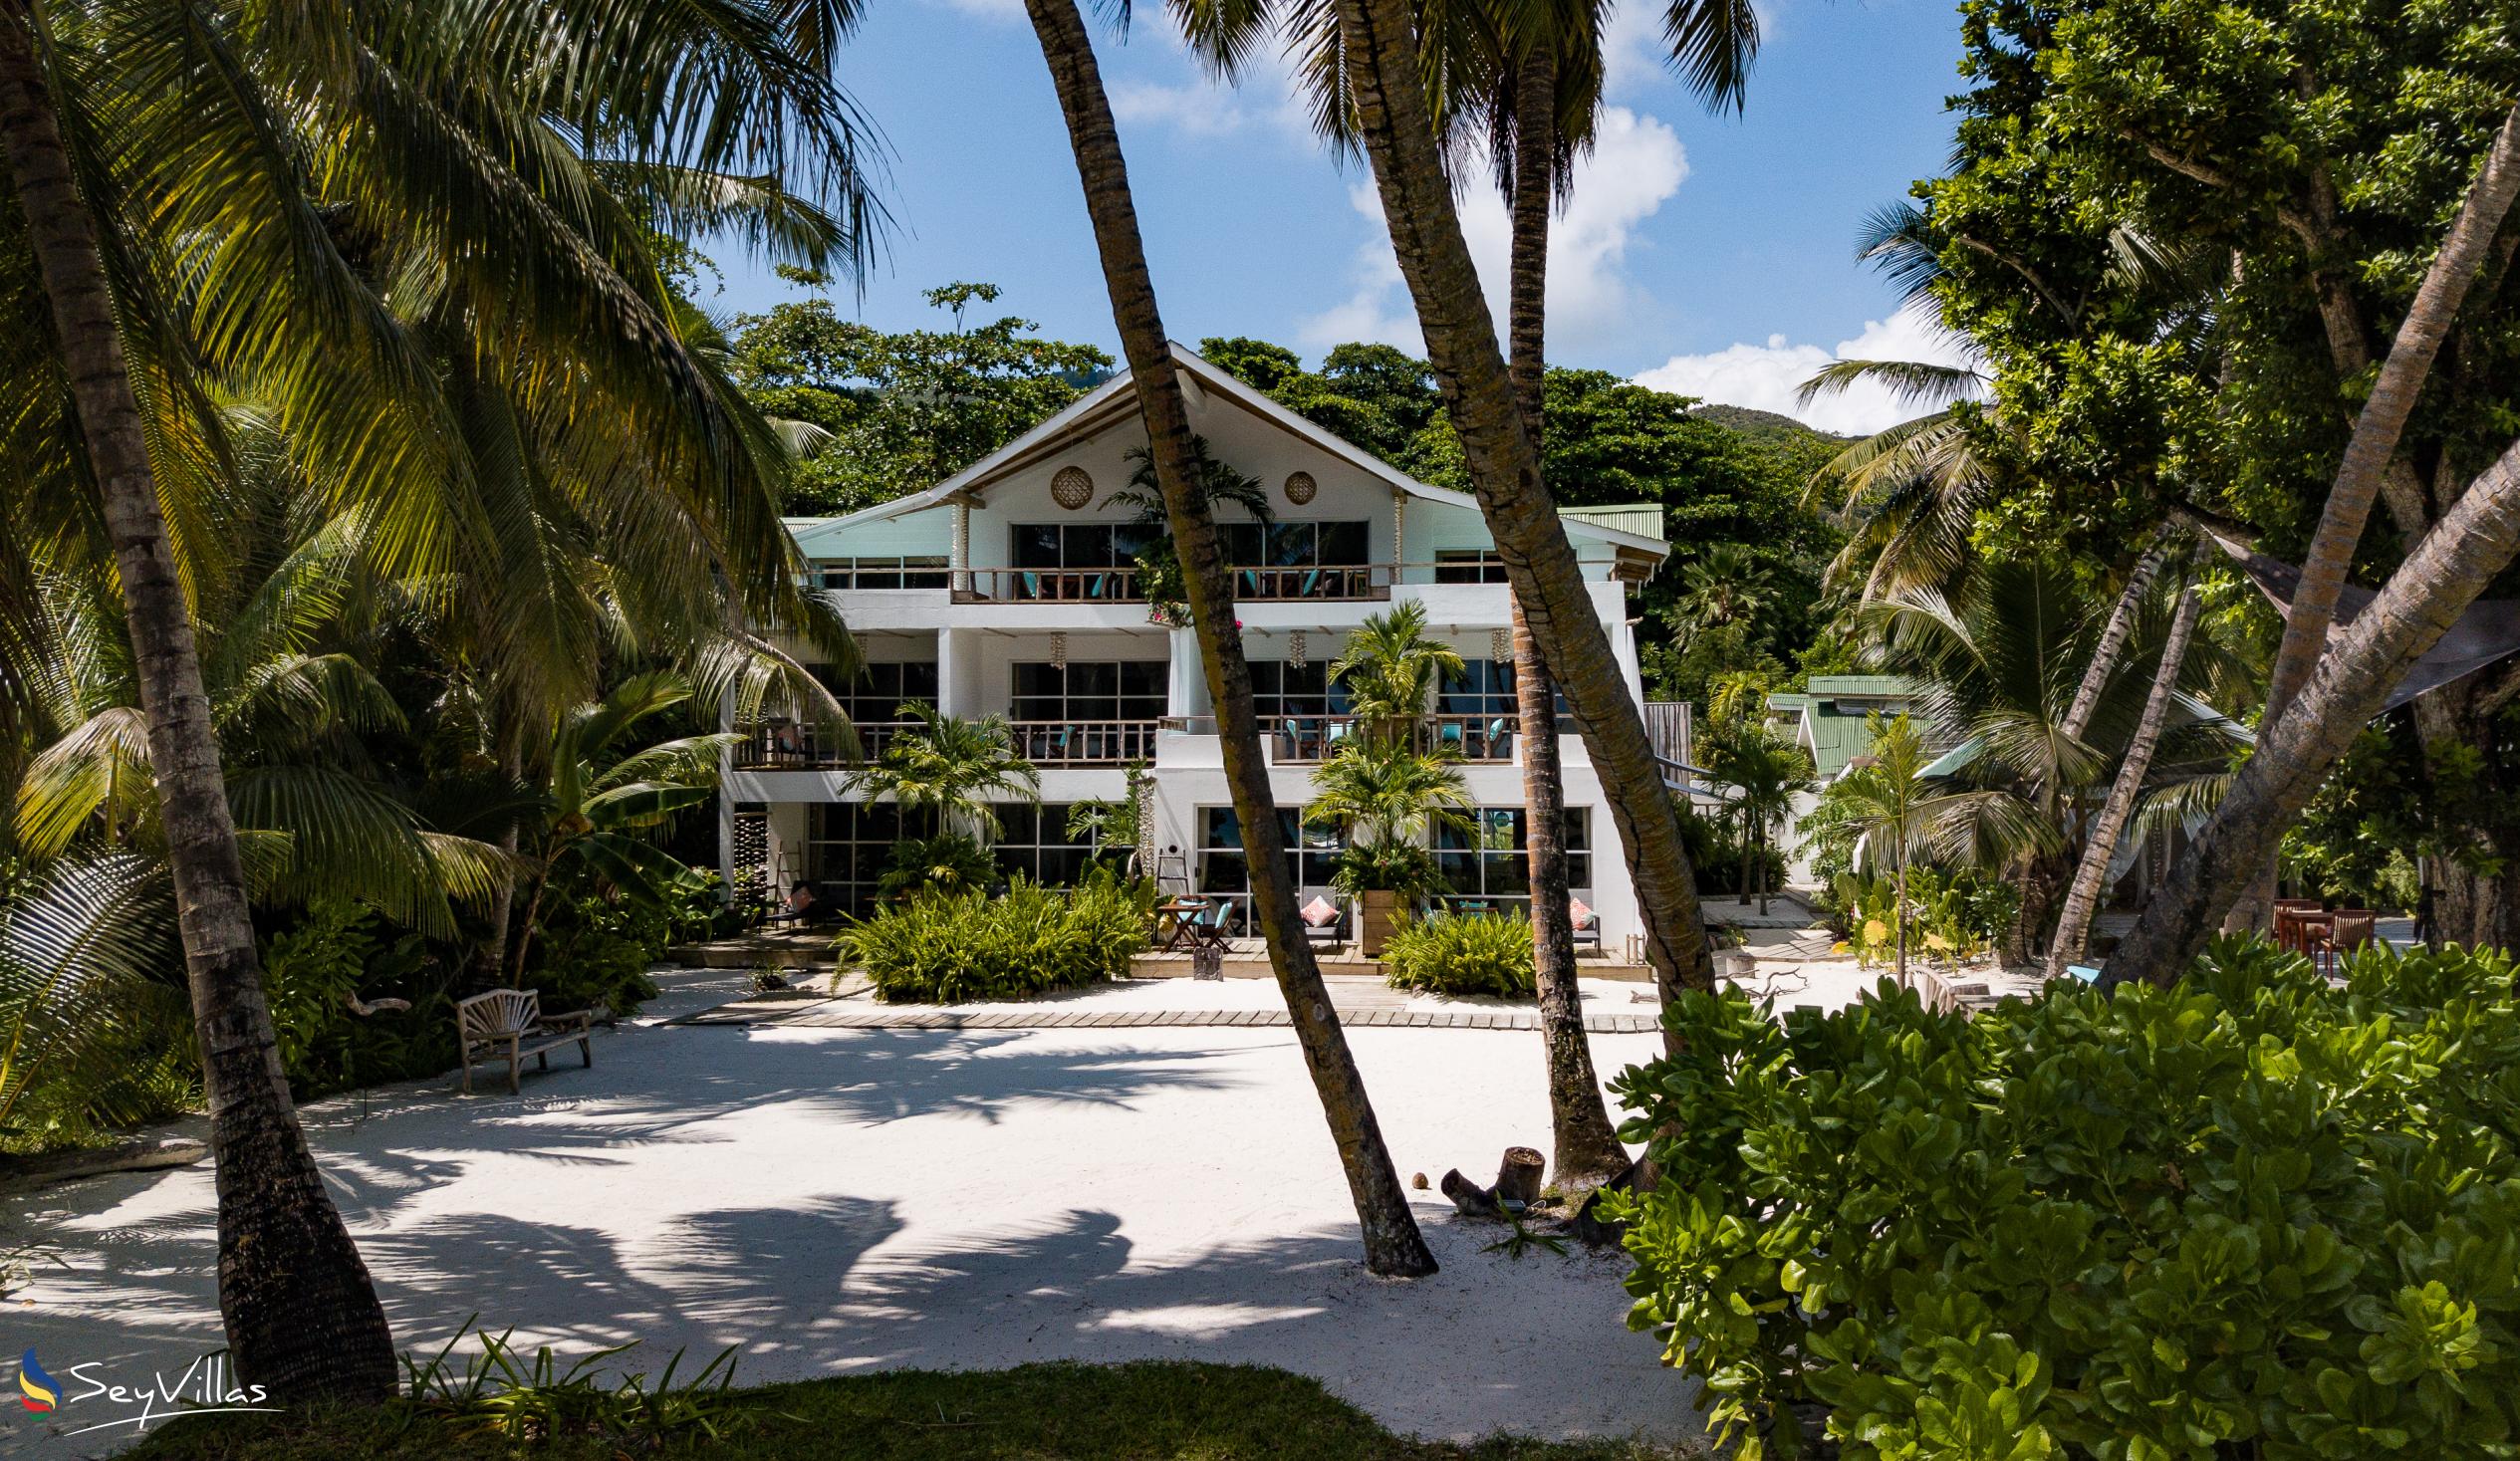 Photo 97: Bliss Hotel Praslin - Beach House - Beach Superior Room - Praslin (Seychelles)